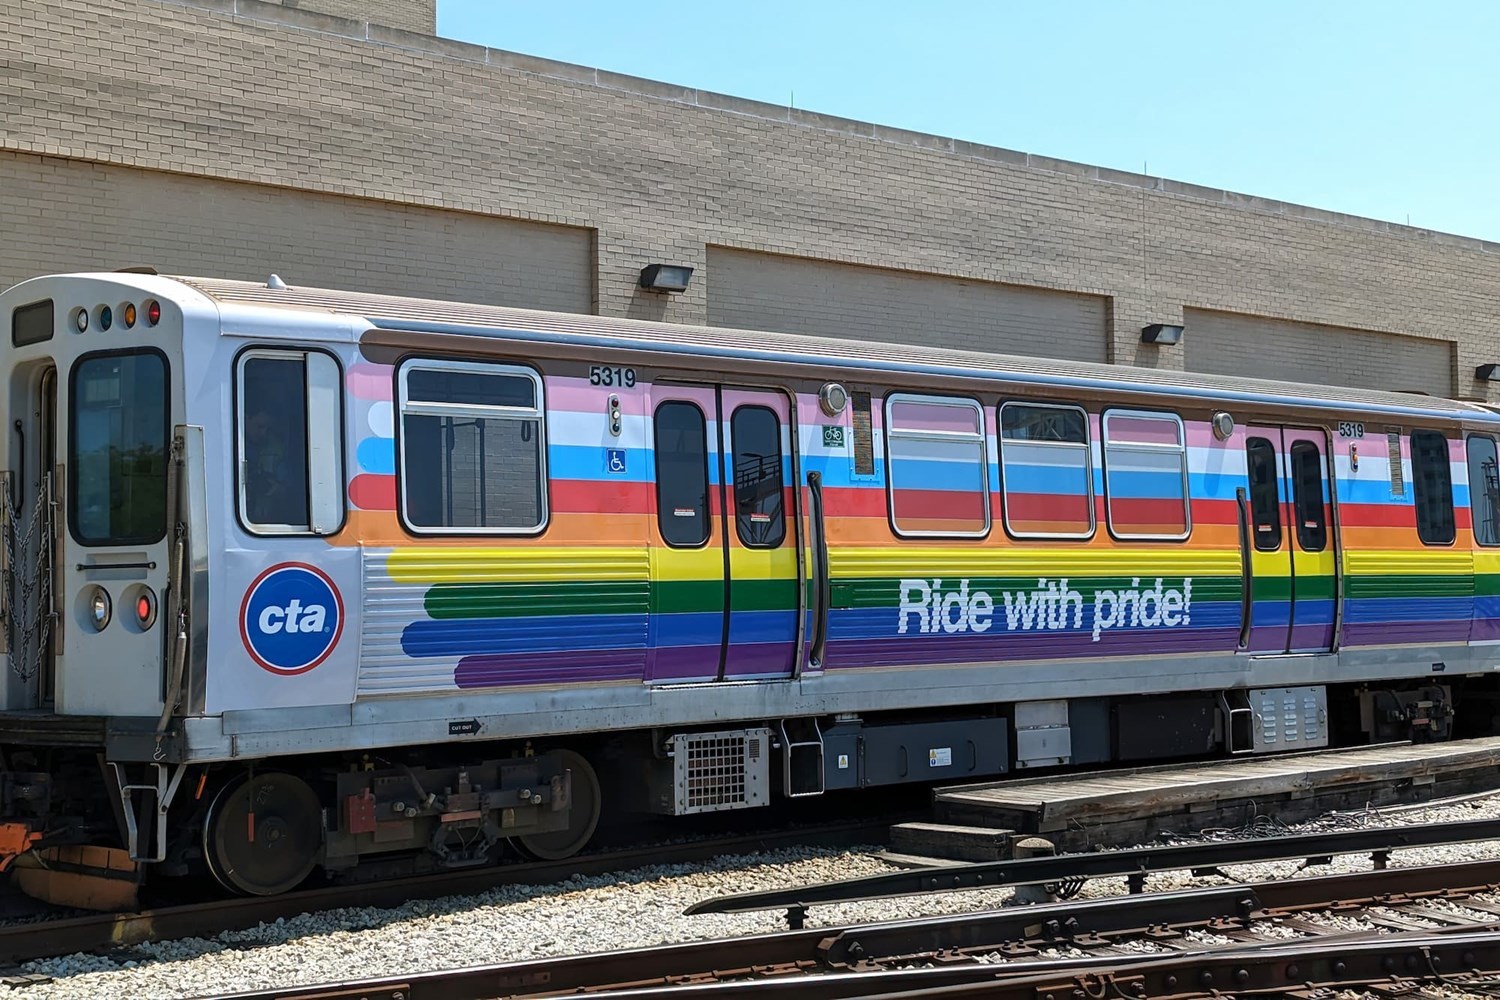 Train car decorated in Pride colors